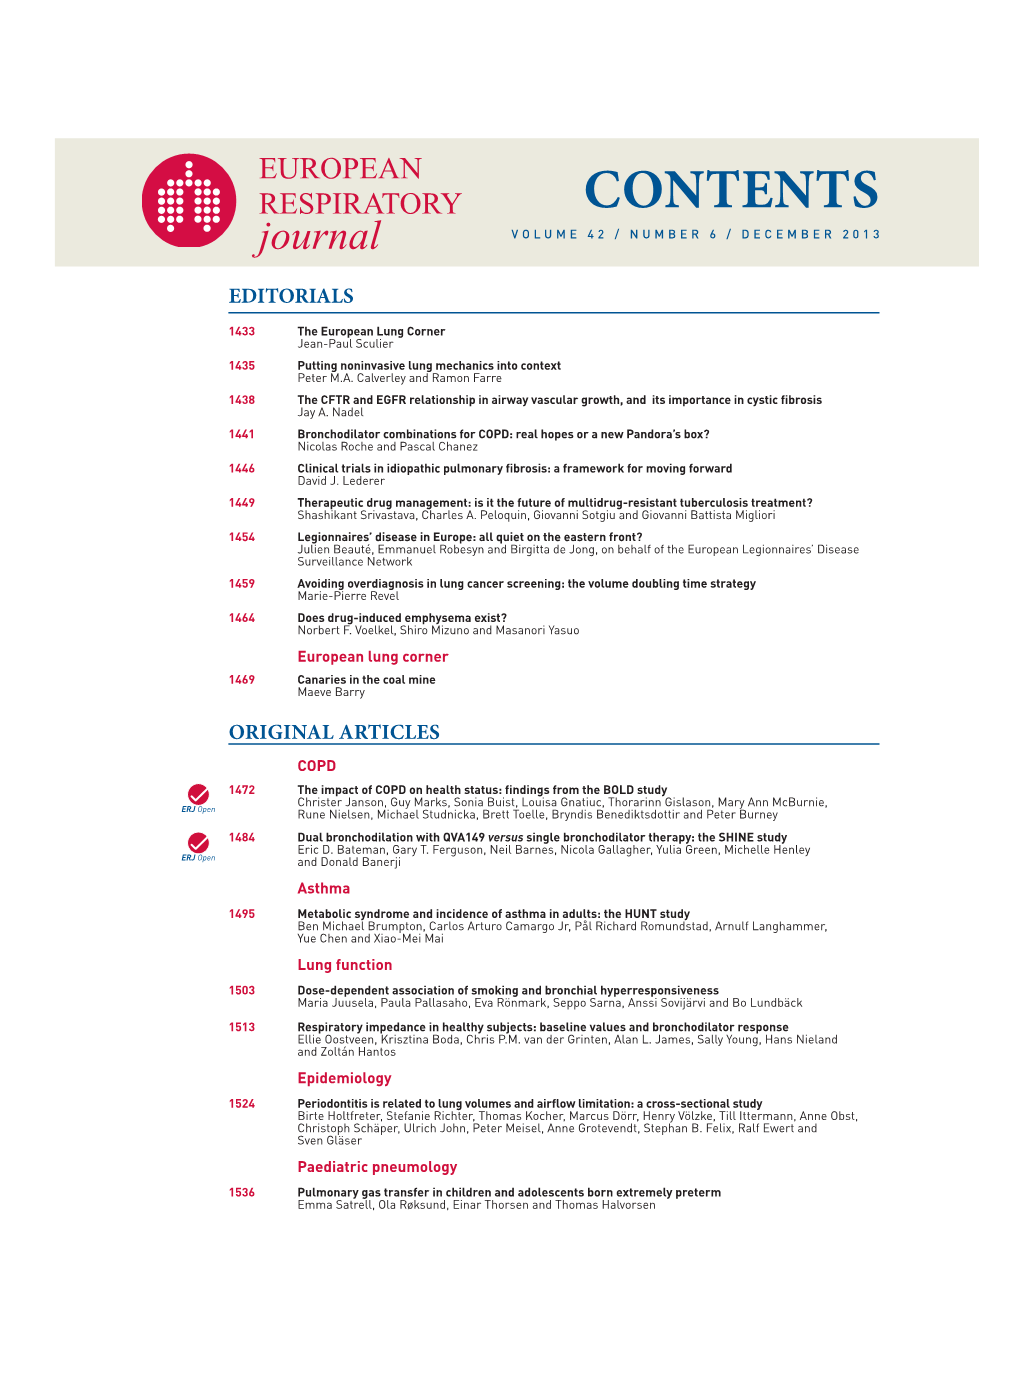 CONTENTS Journal VOLUME 42 / NUMBER 6 / DECEMBER 2013